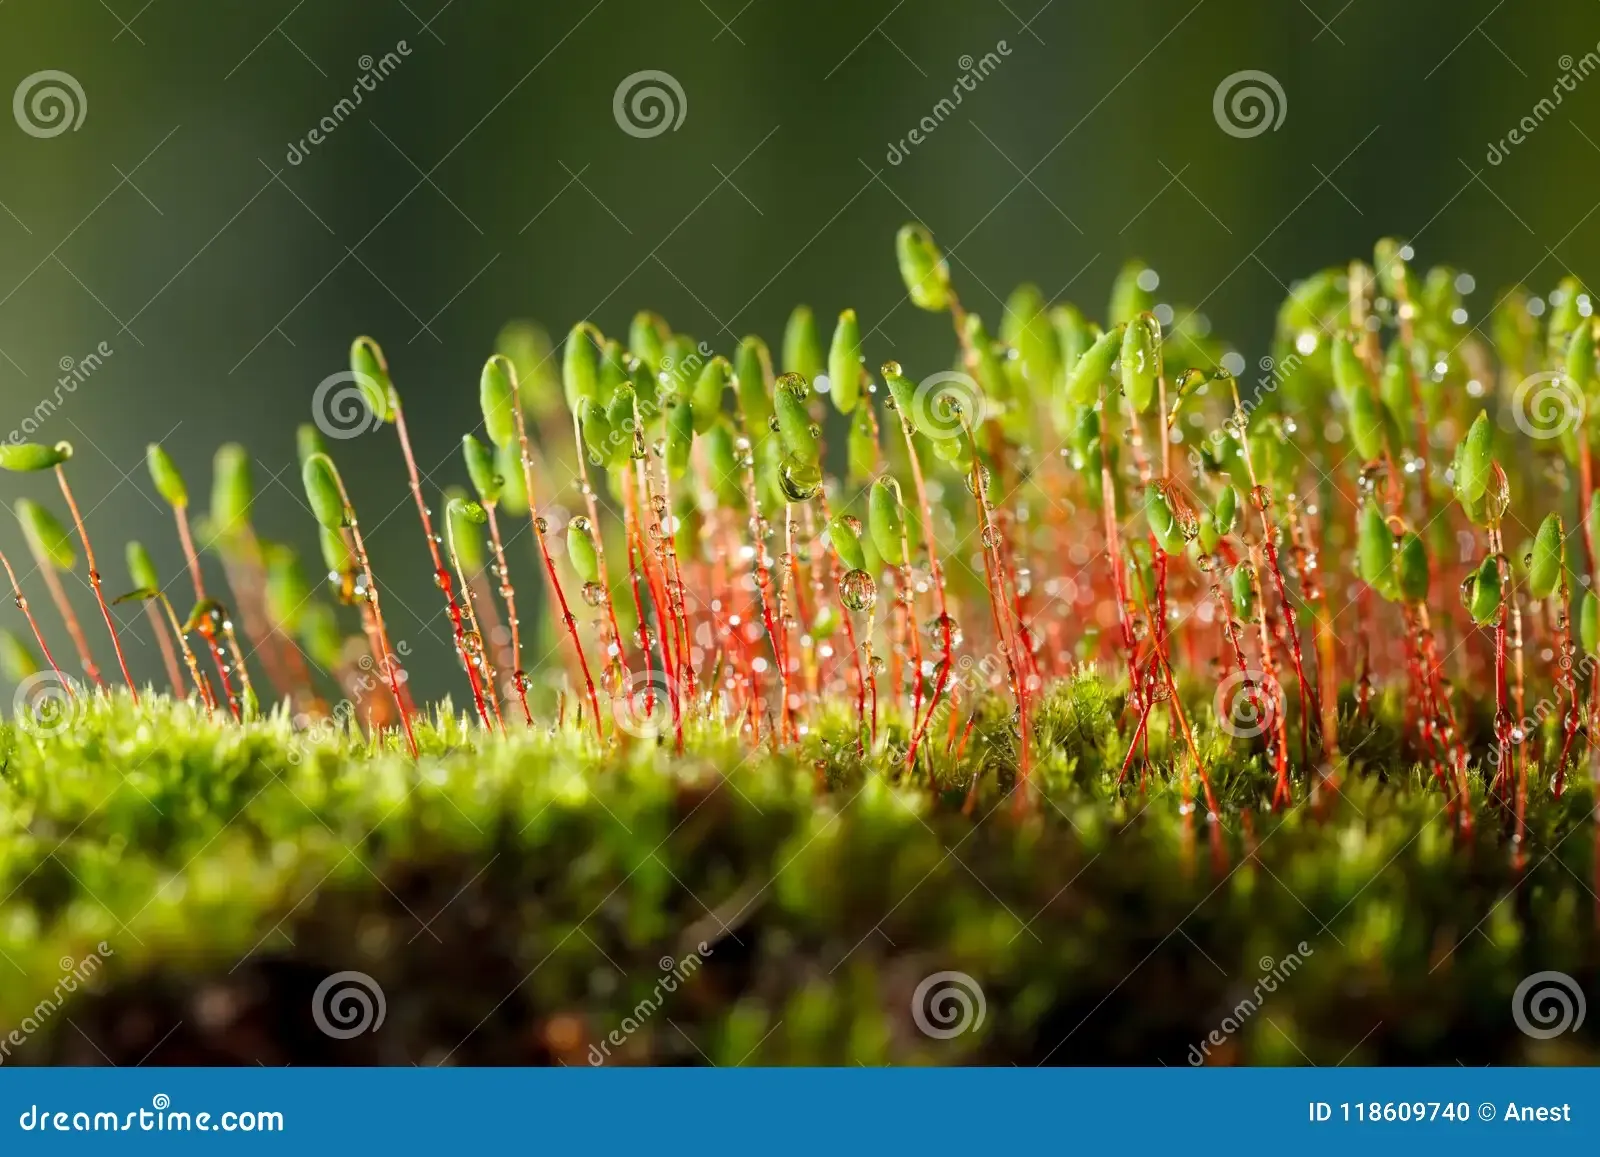 macro-pohlia-nutans-moss-green-capsules-bryum-forest-floor-dew-drops-shallow-depth-field-118609740.jpg